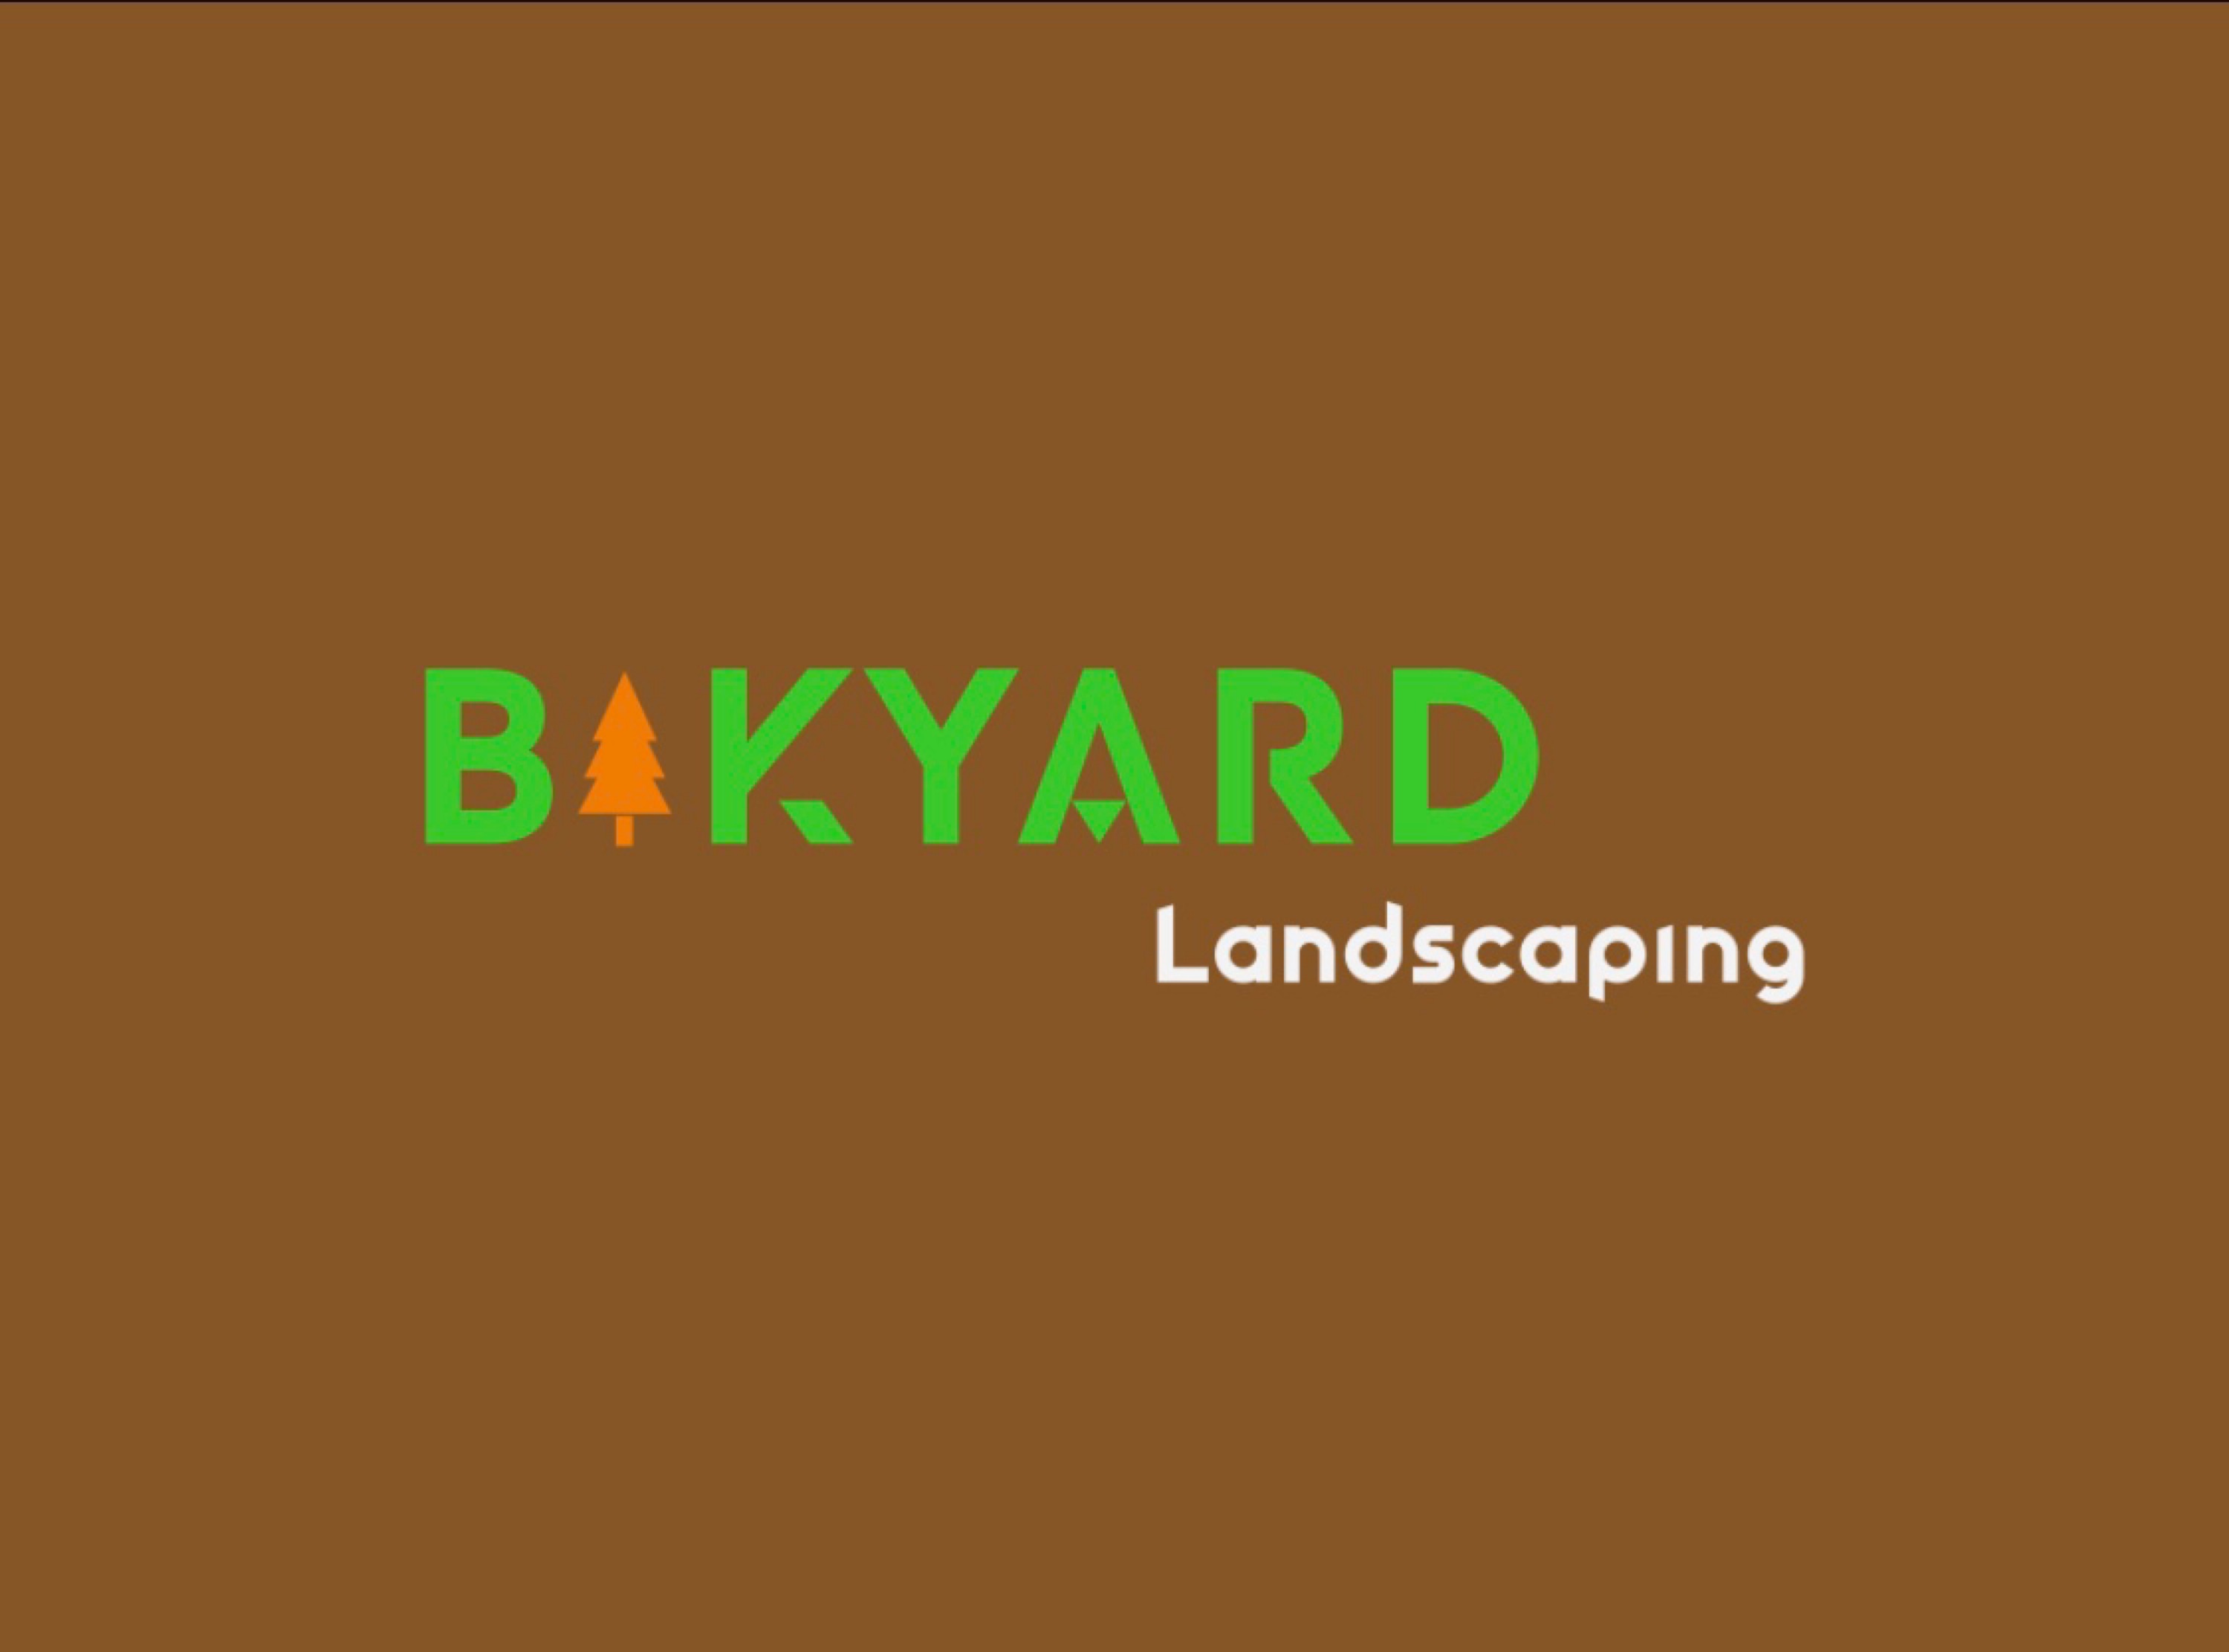 Bakyard Landscaping Logo